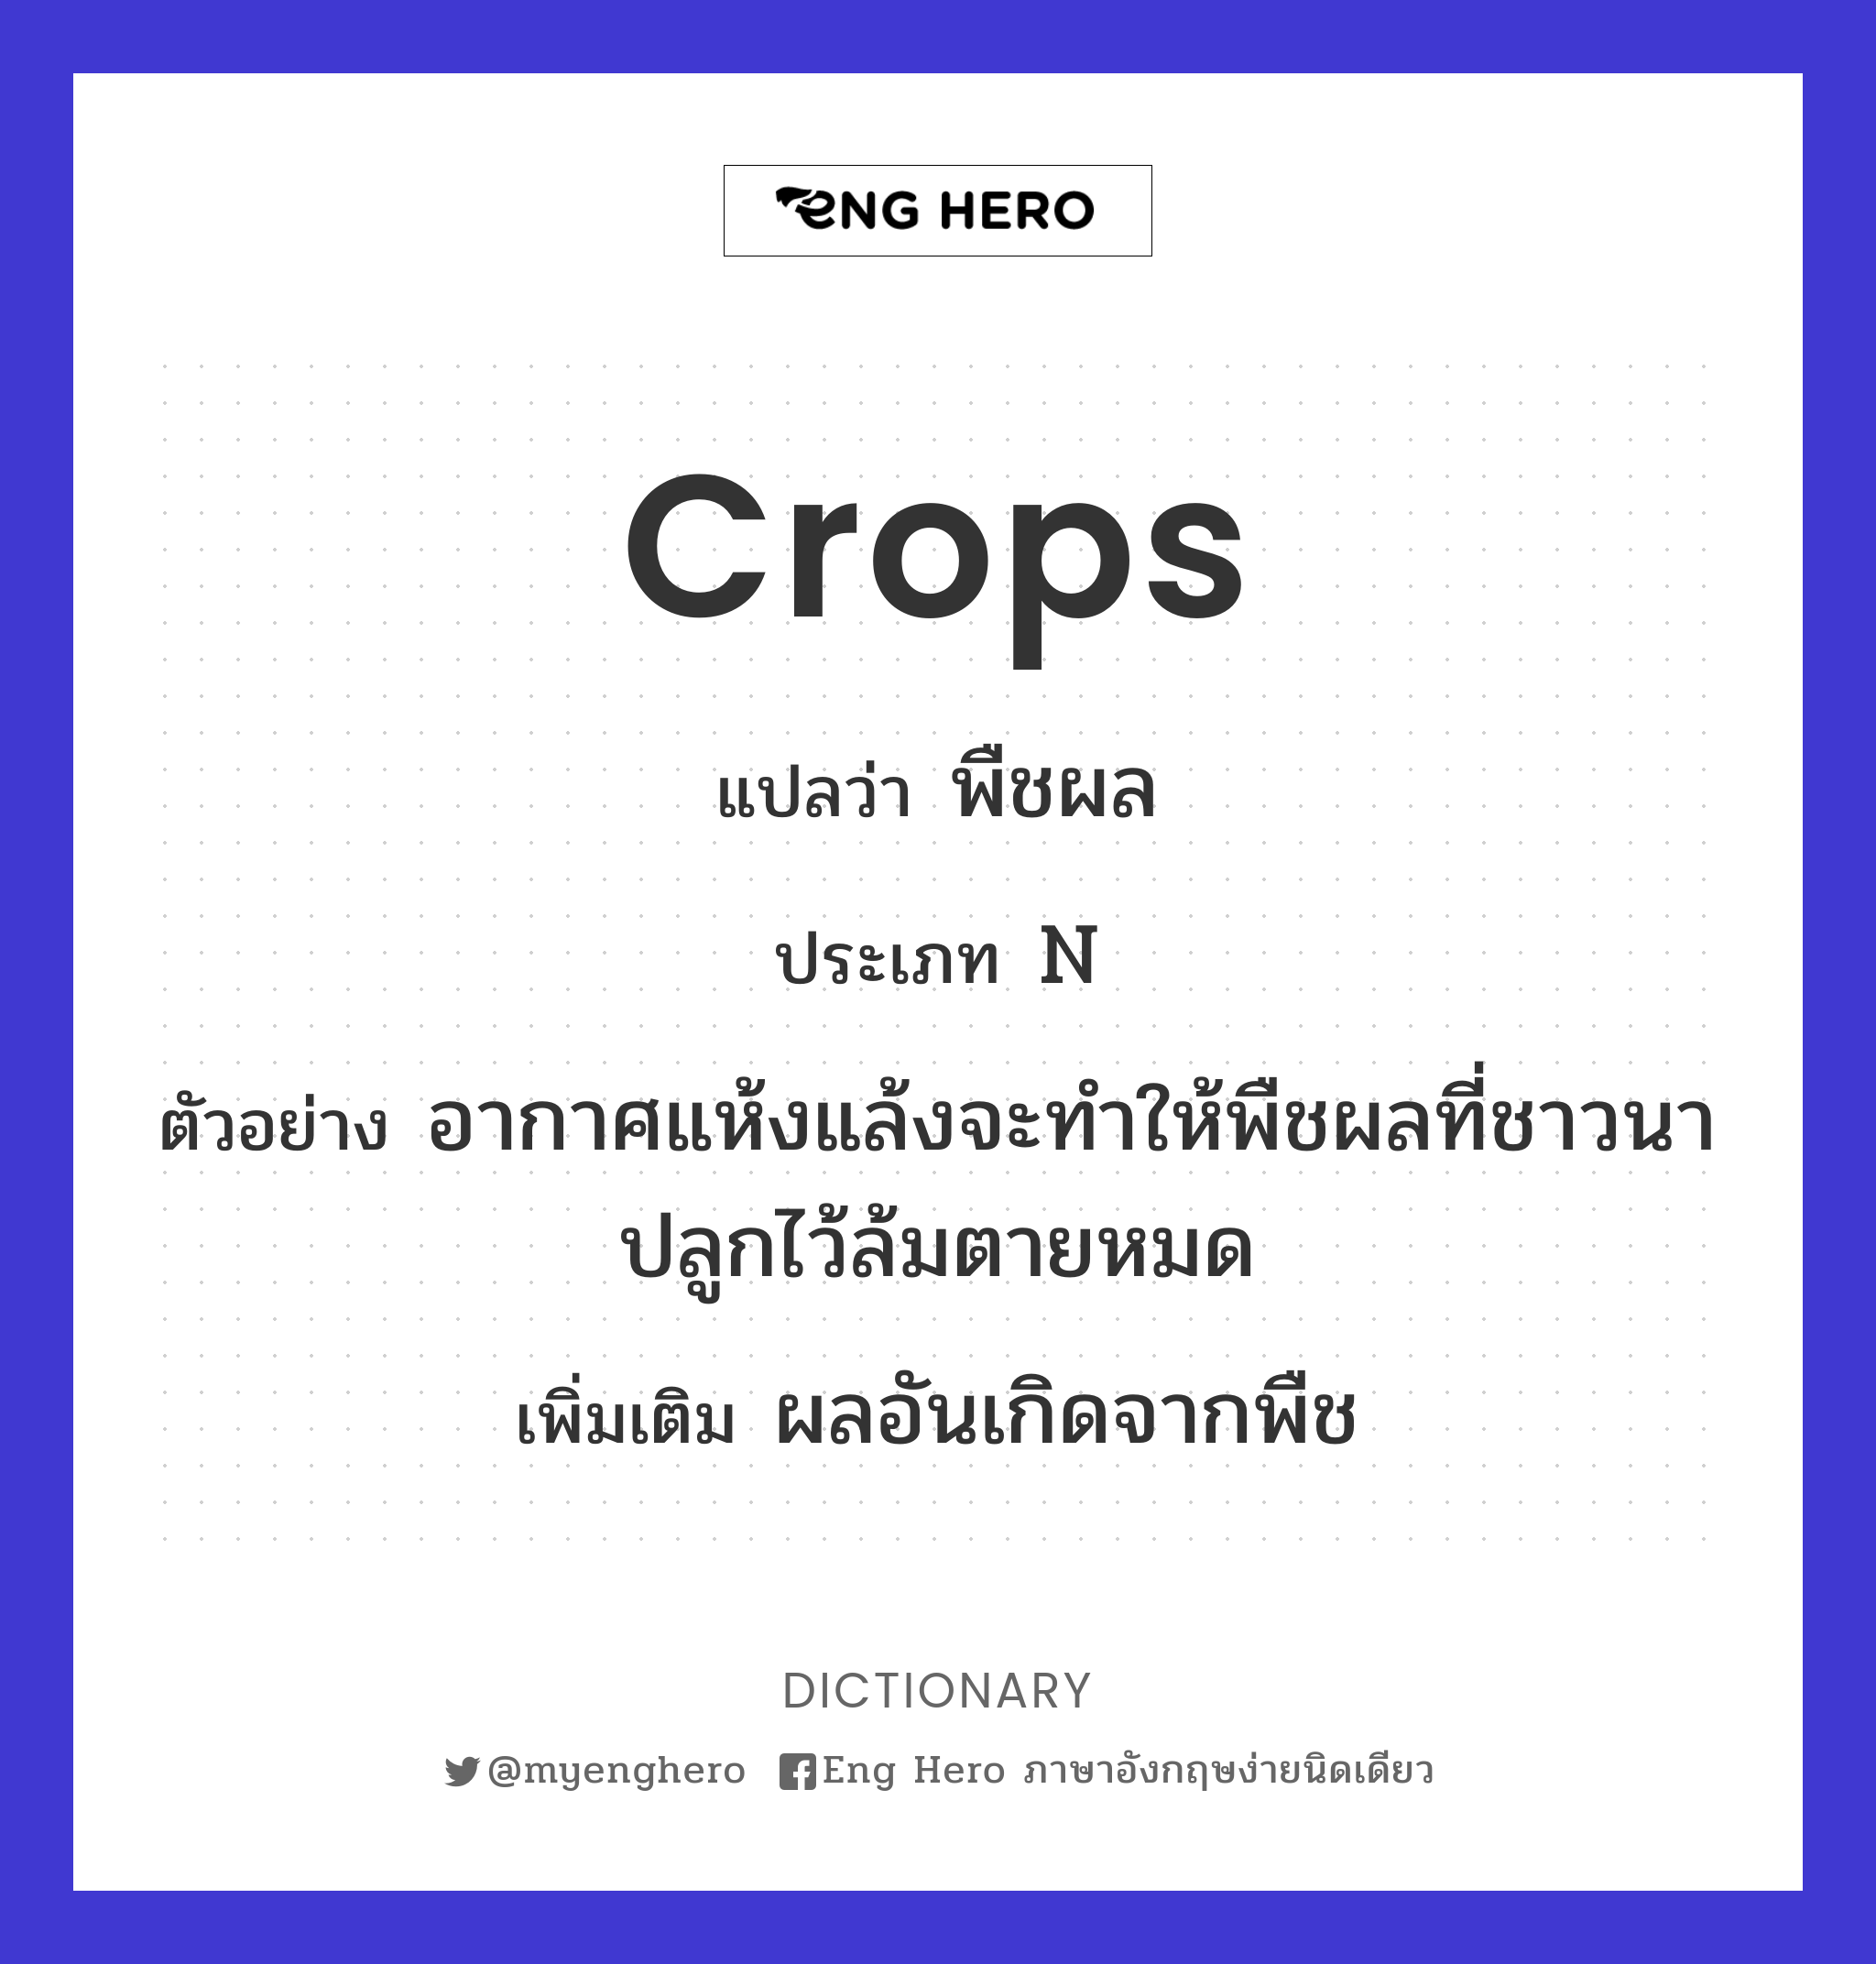 crops